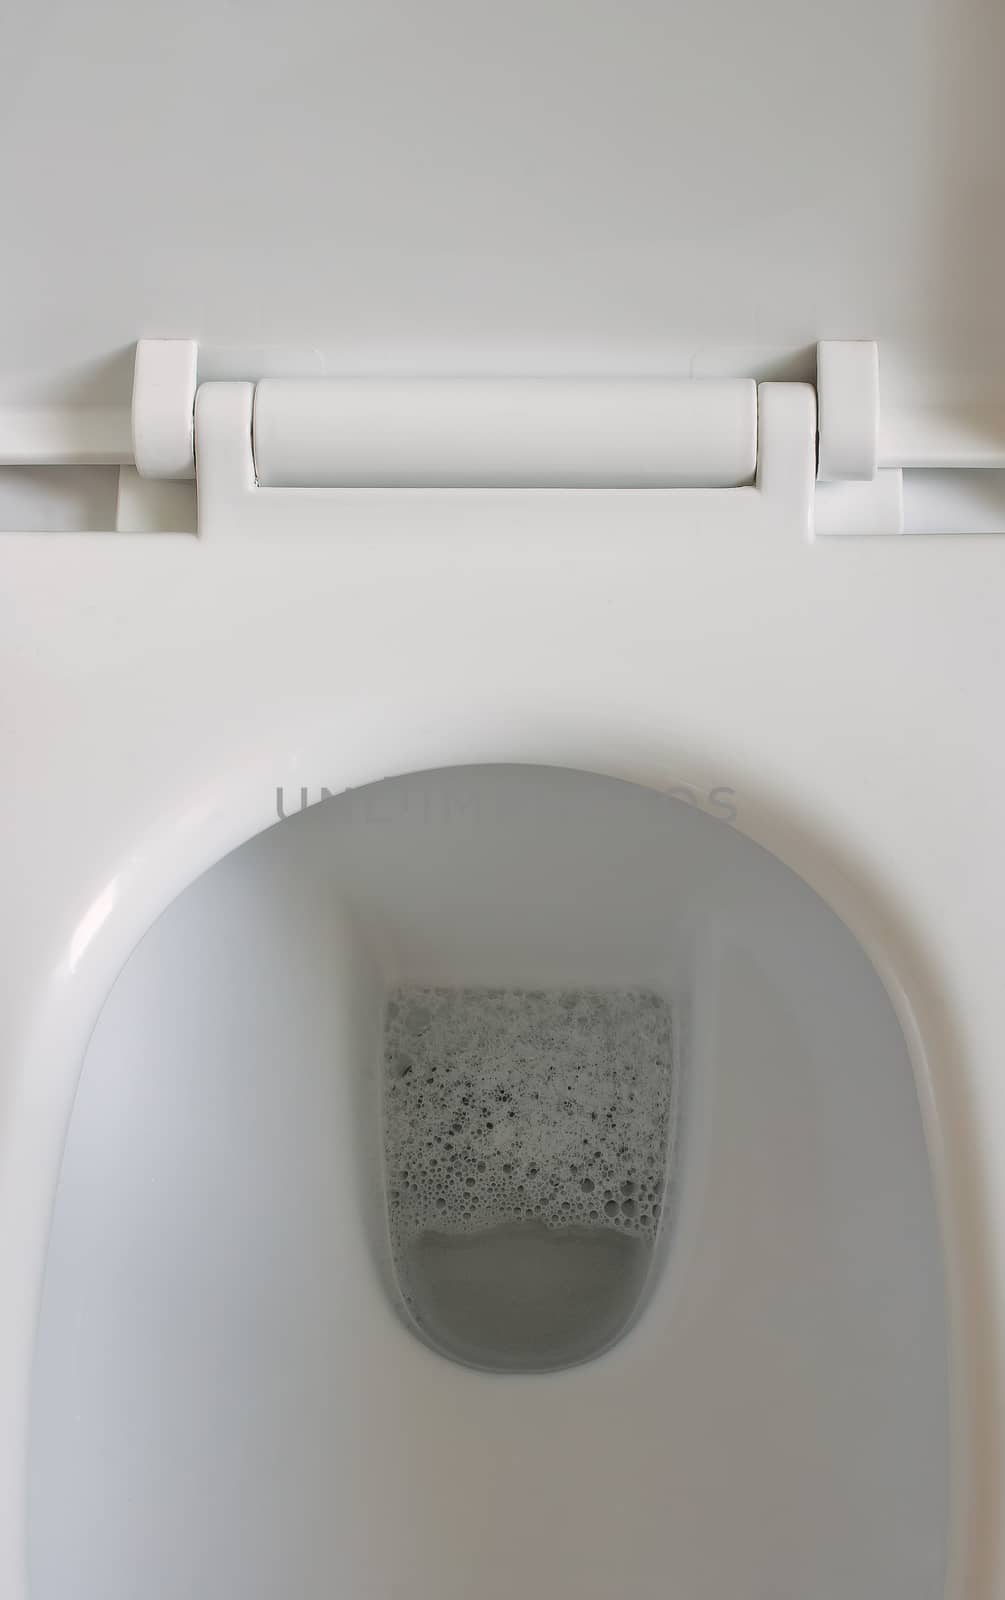 White toilet bowl in the passage